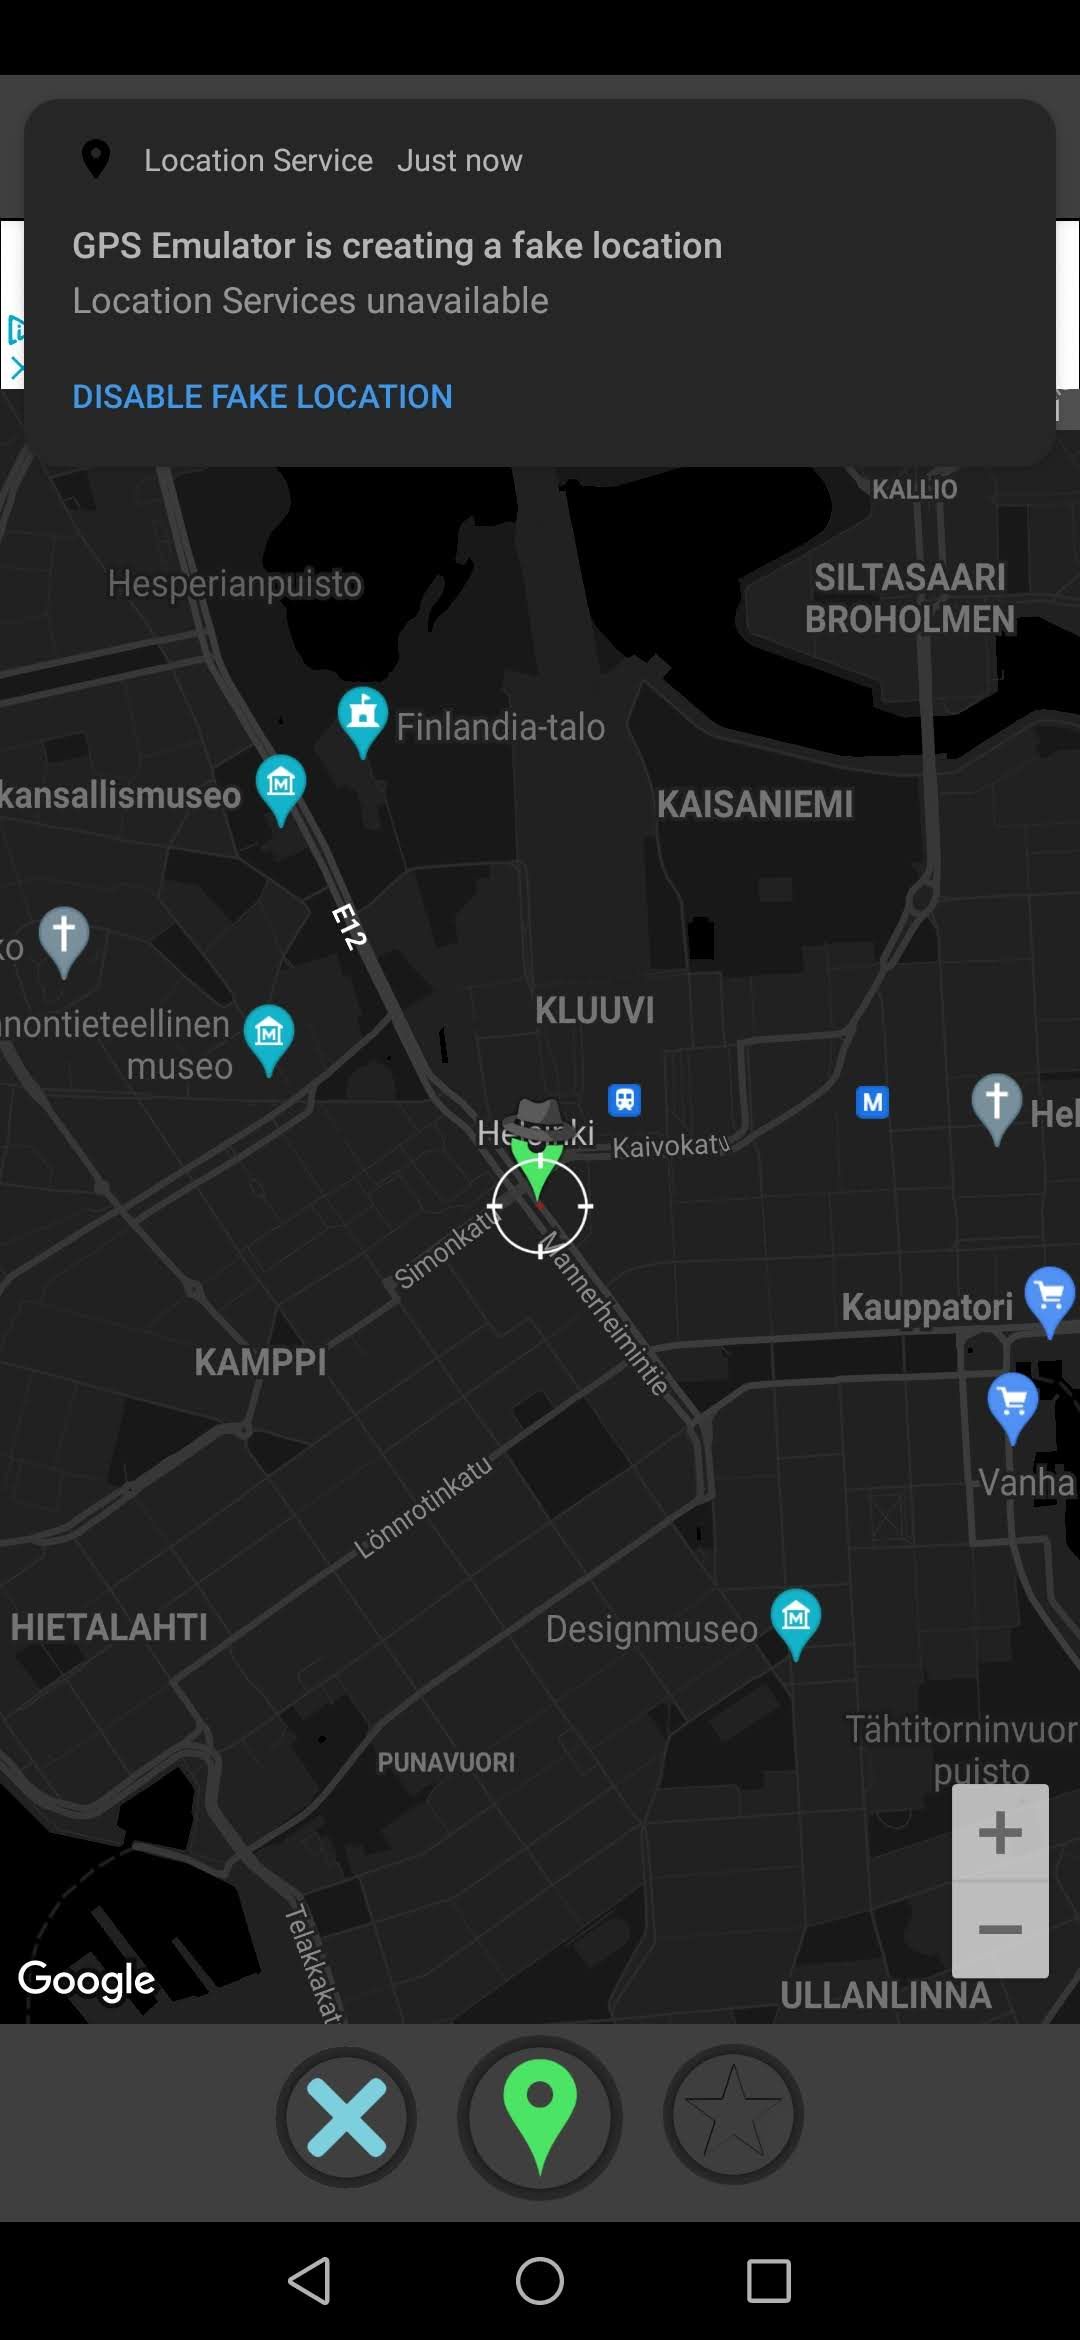 GPS Emulator location pinpoint